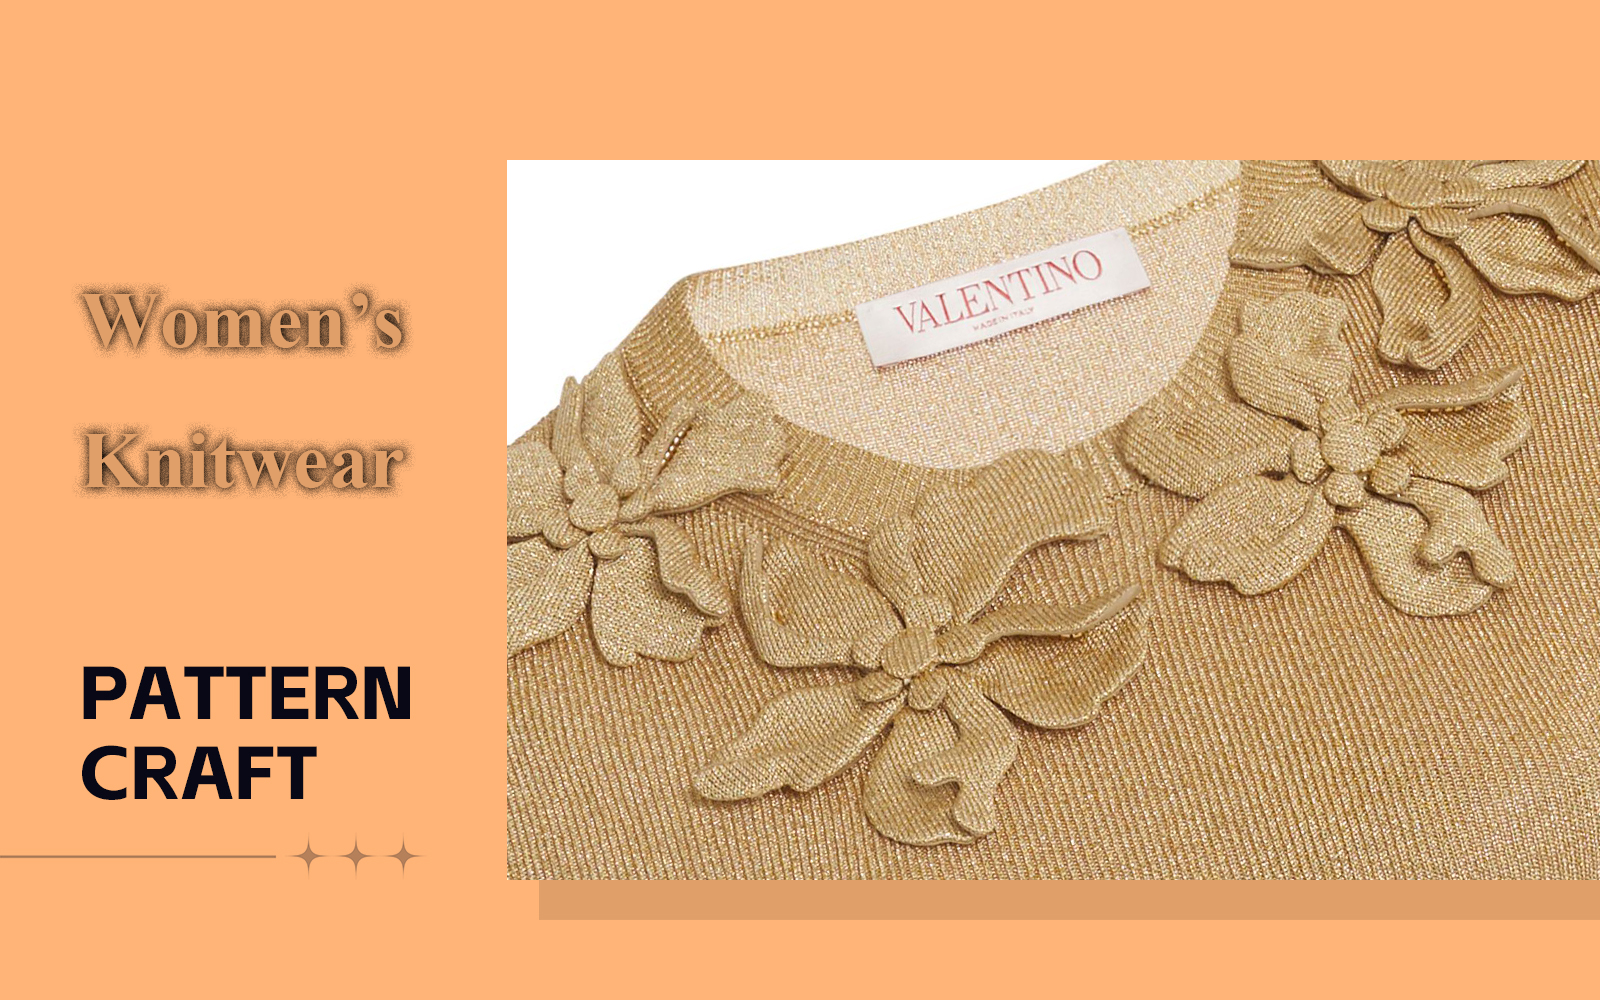 The Pattern Craft Trend for Women's Knitwear